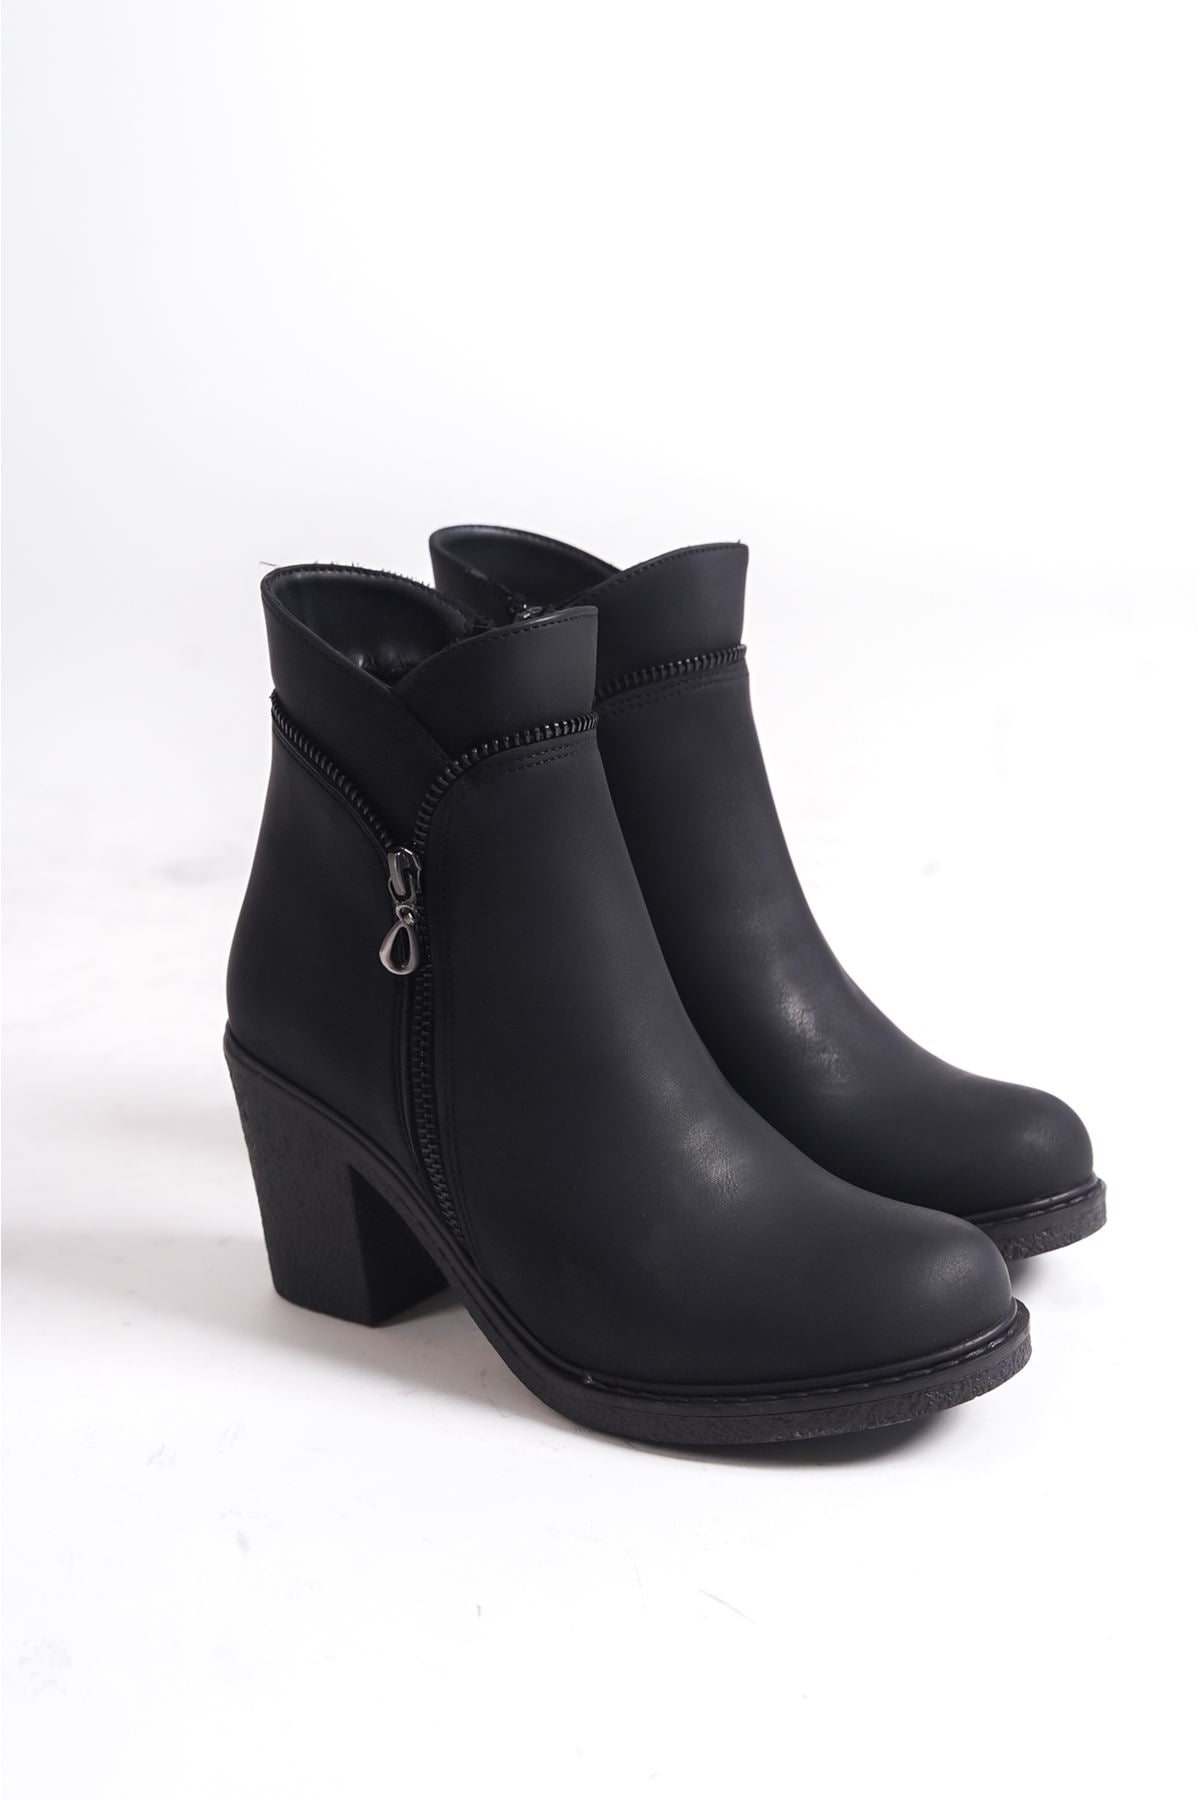 Zana Black Heeled Zippered Leather Women's Boots - STREETMODE™